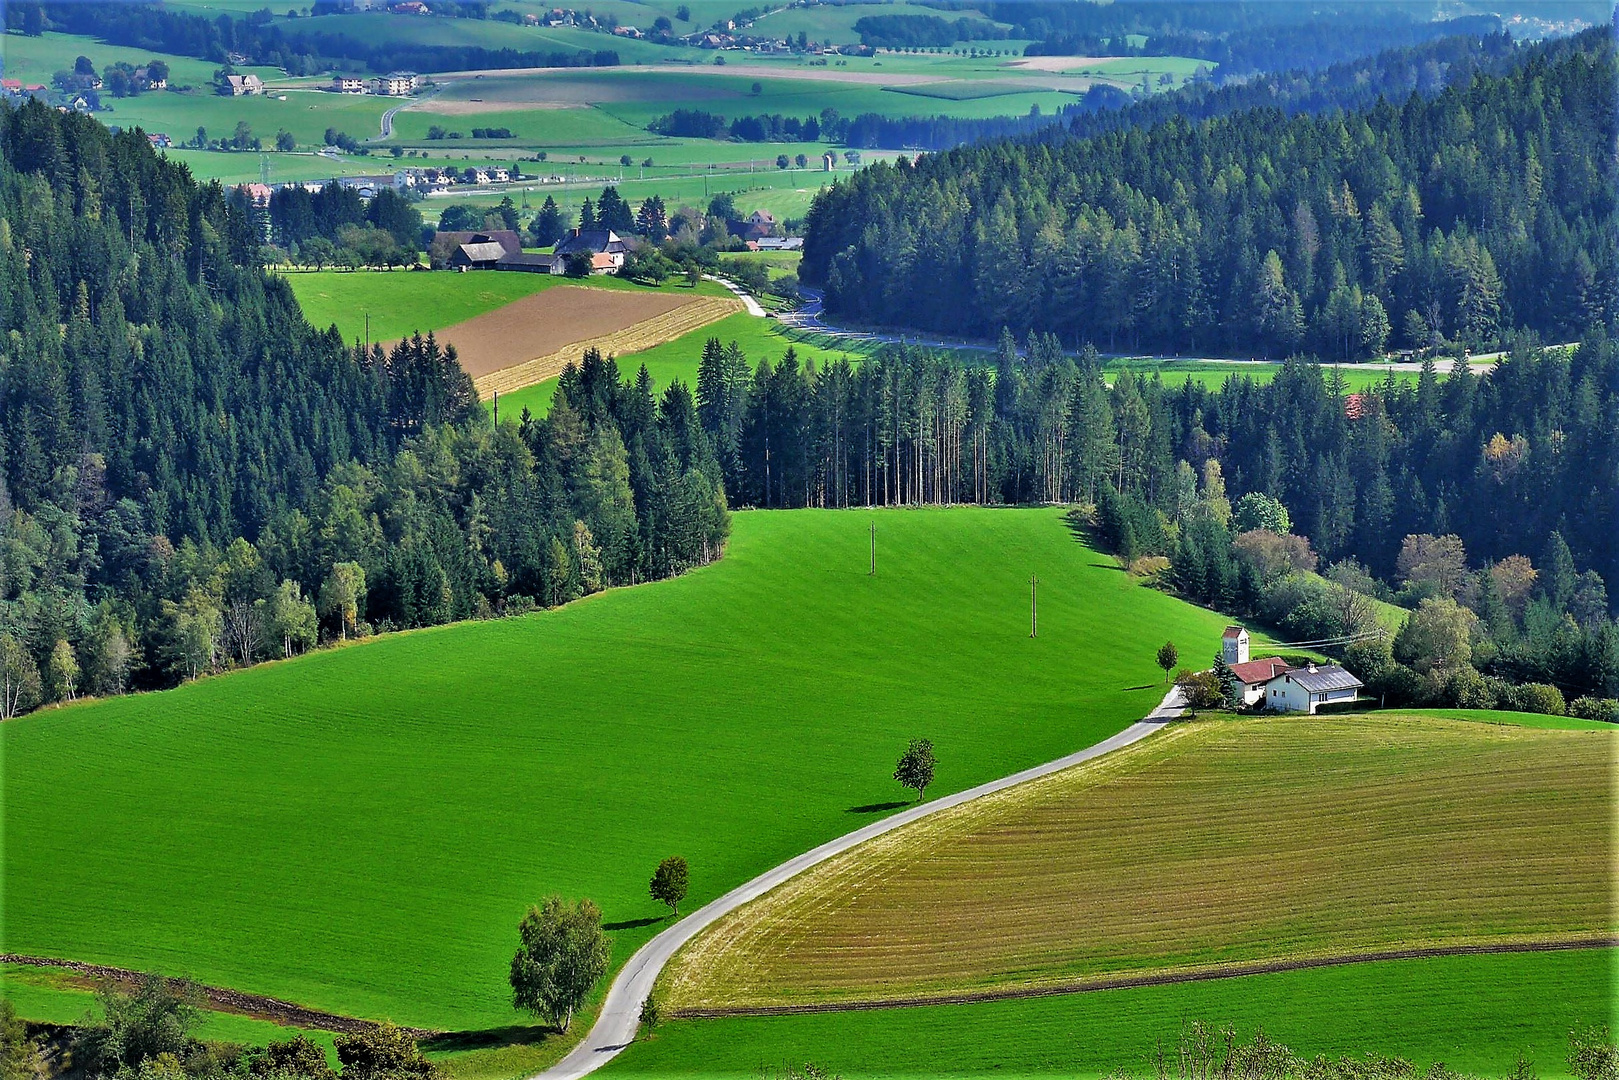 Styria landscape